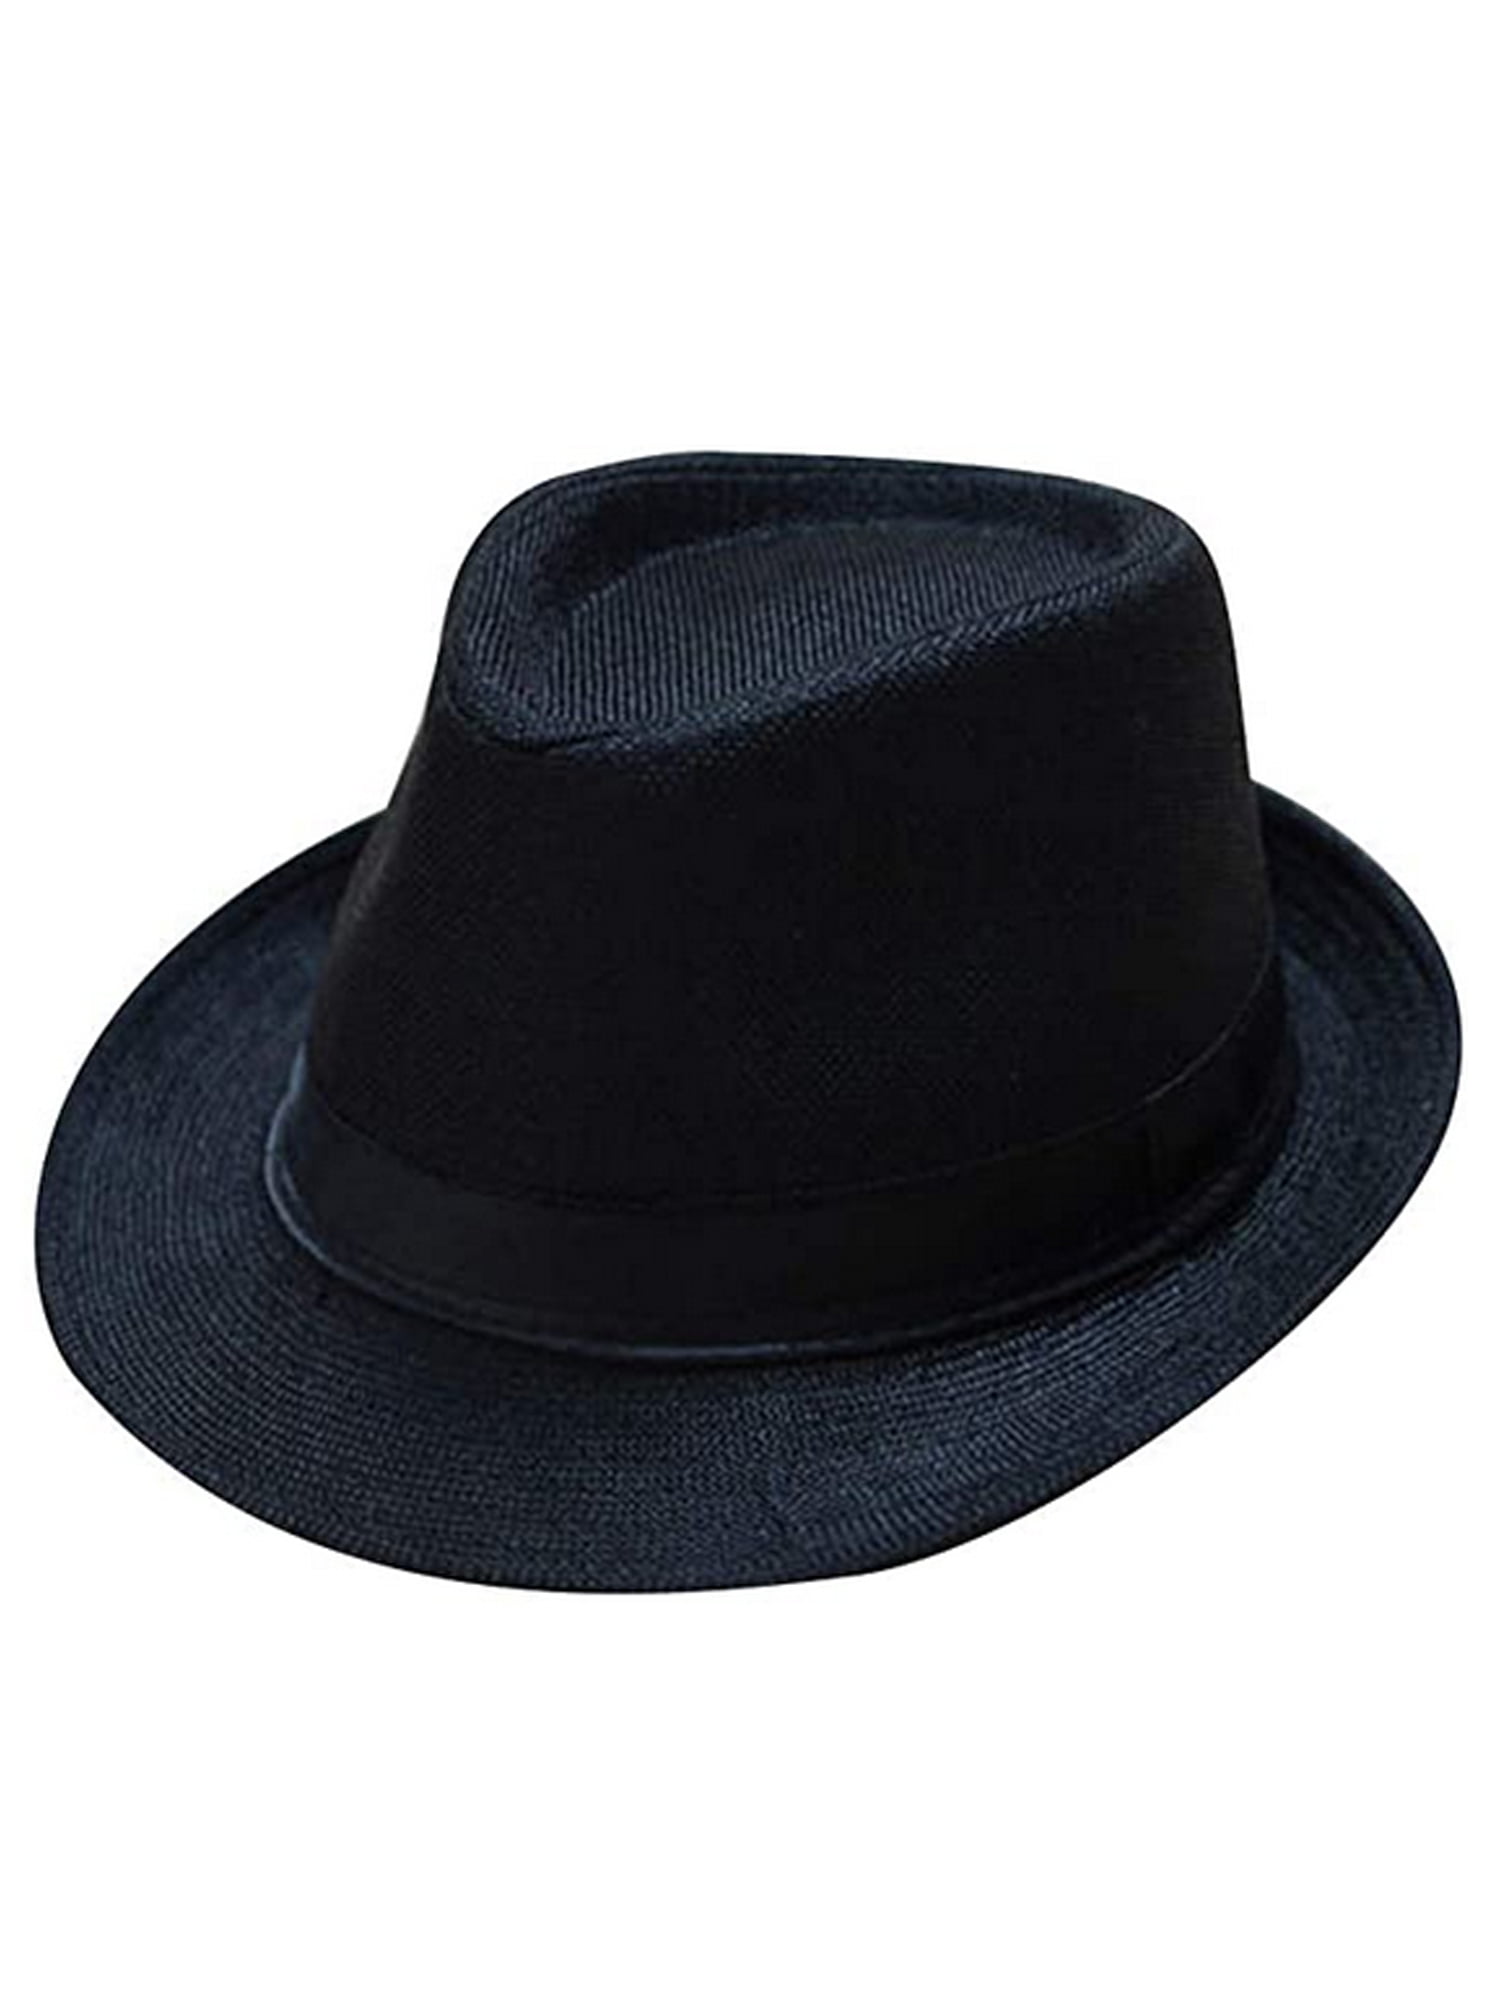 Men Women Unisex Fedora Hat Trilby Cuban Style Upturn Short Brim Cap Hat Panama 